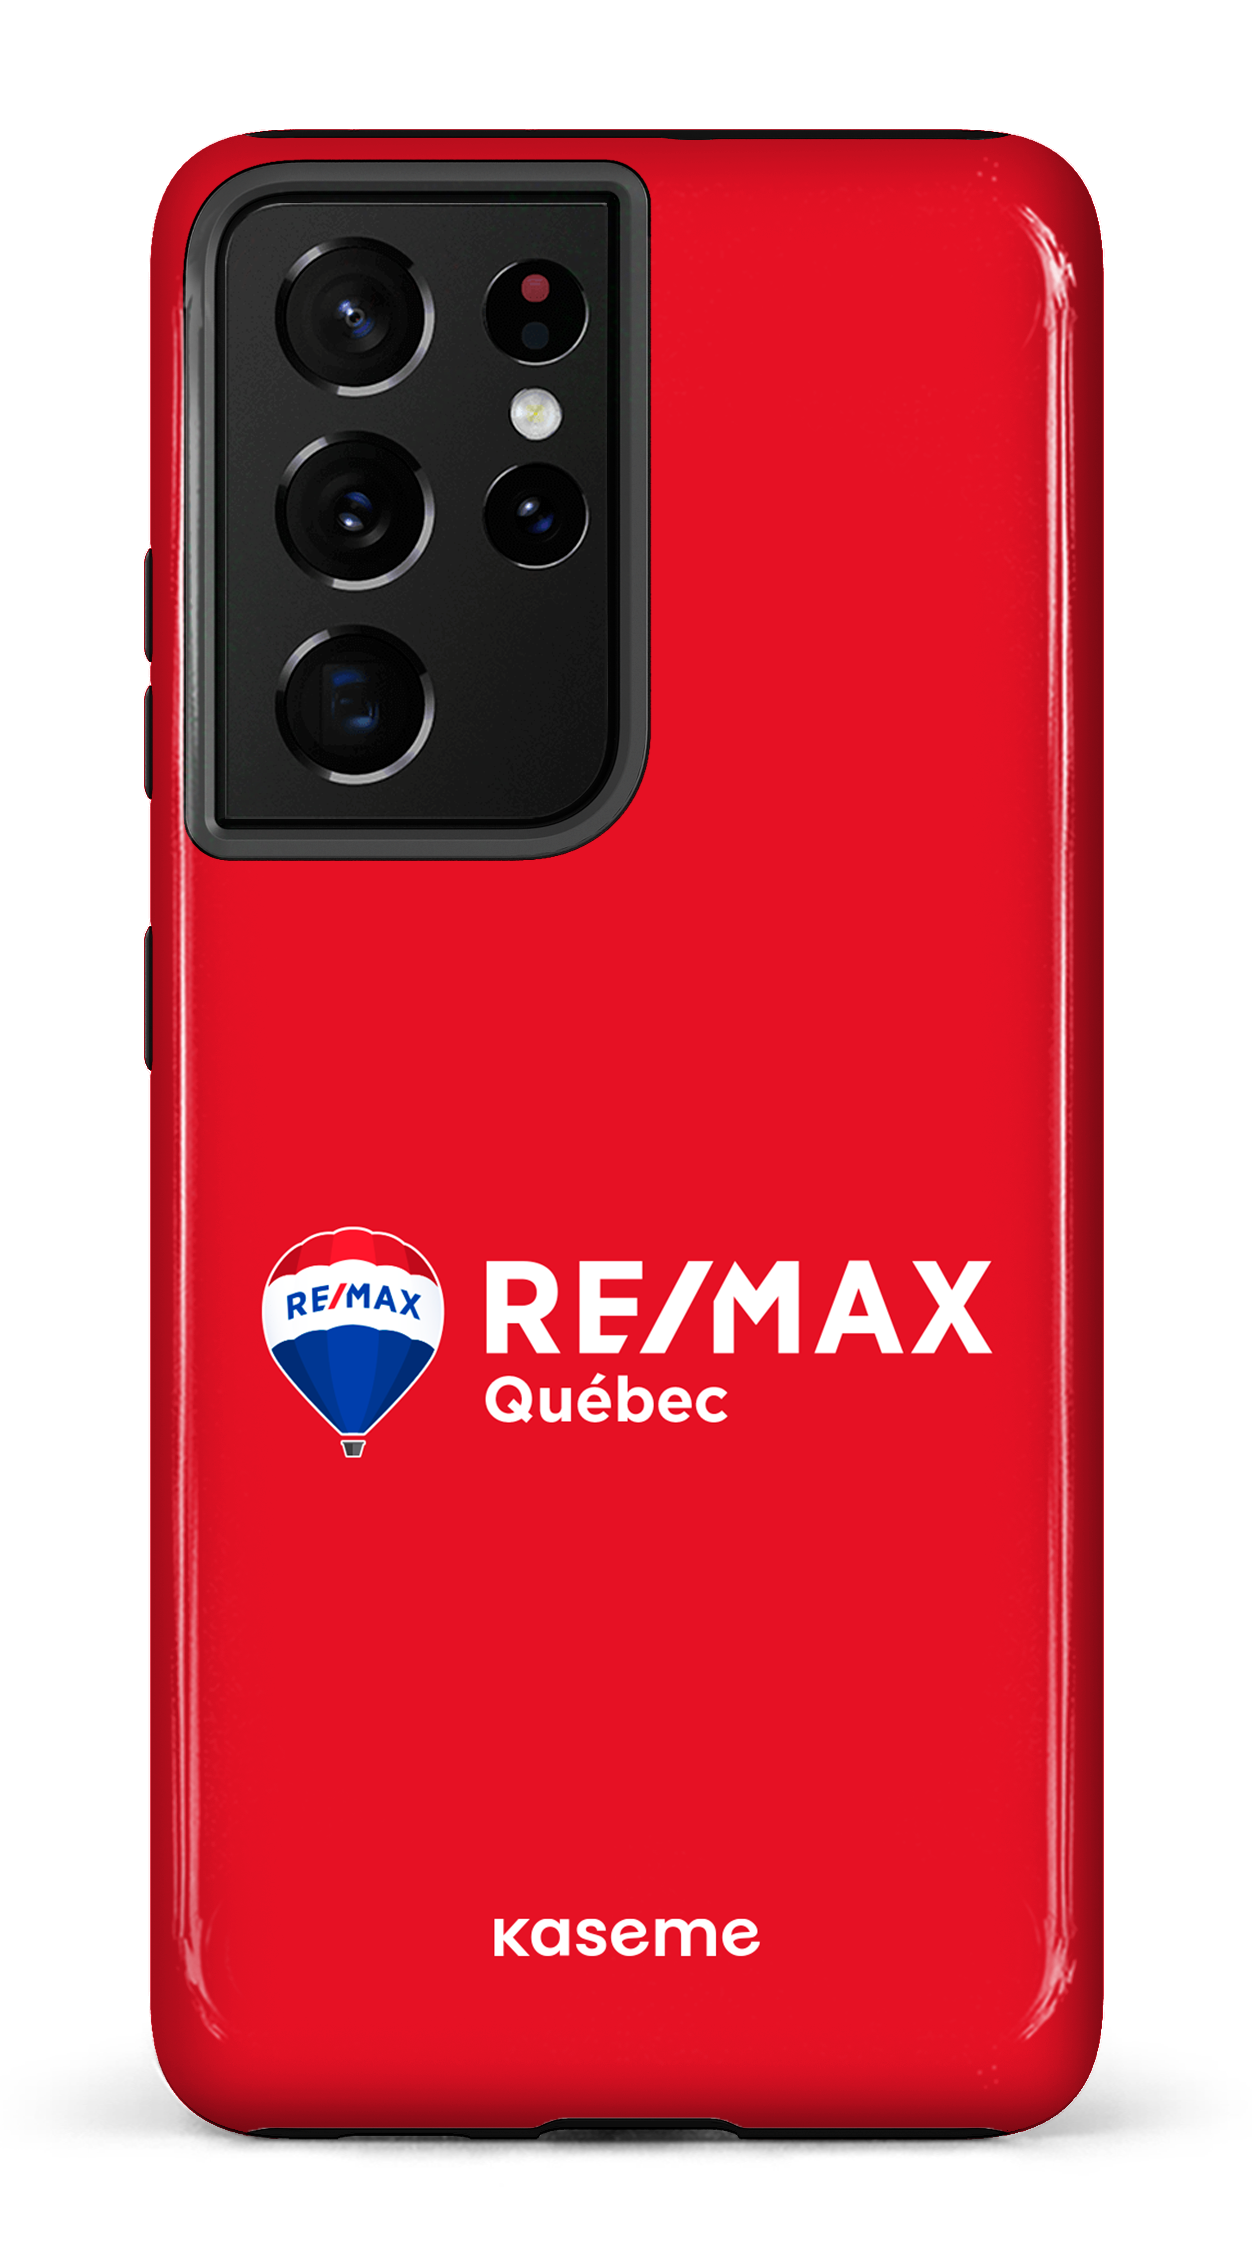 Remax Québec Rouge - Galaxy S21 Ultra